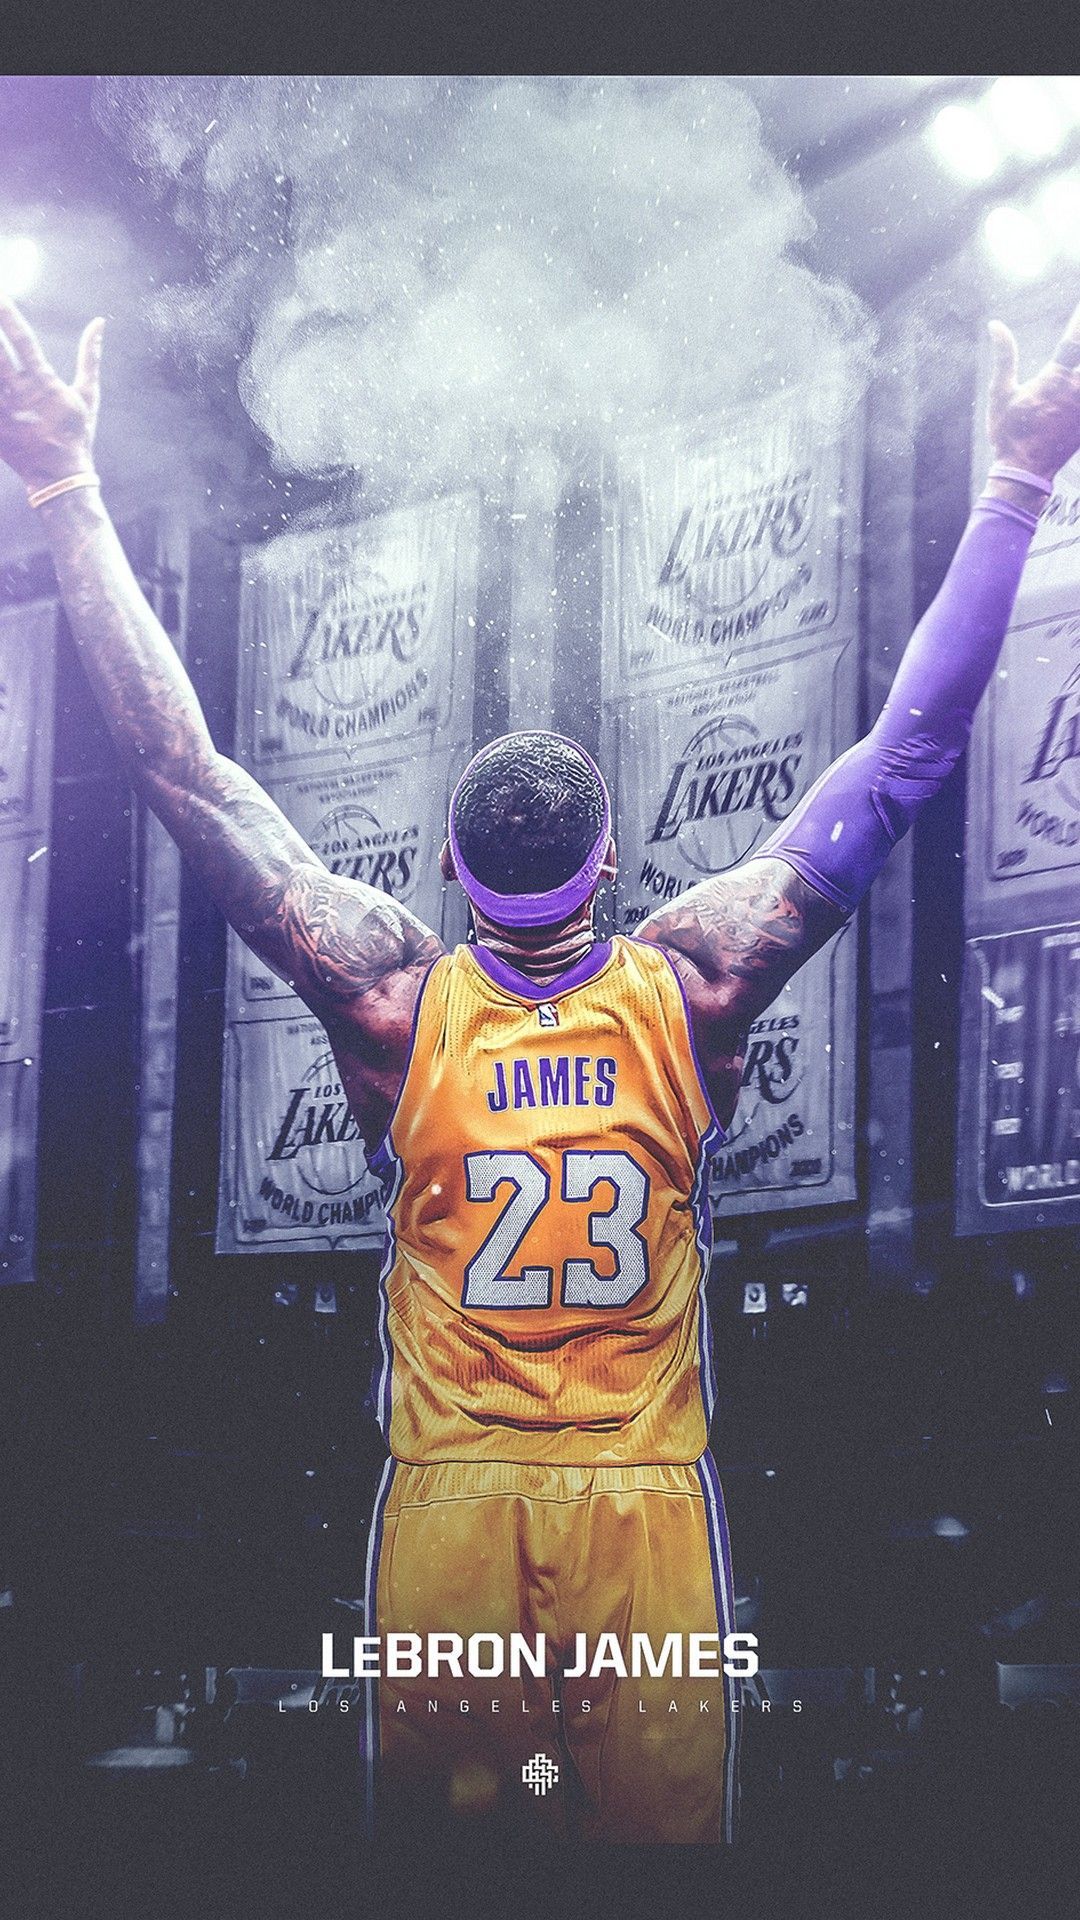 LeBron James LA Lakers HD Wallpaper For iPhone Basketball Wallpaper. Lebron james poster, Basketball wallpaper hd, Lebron james wallpaper